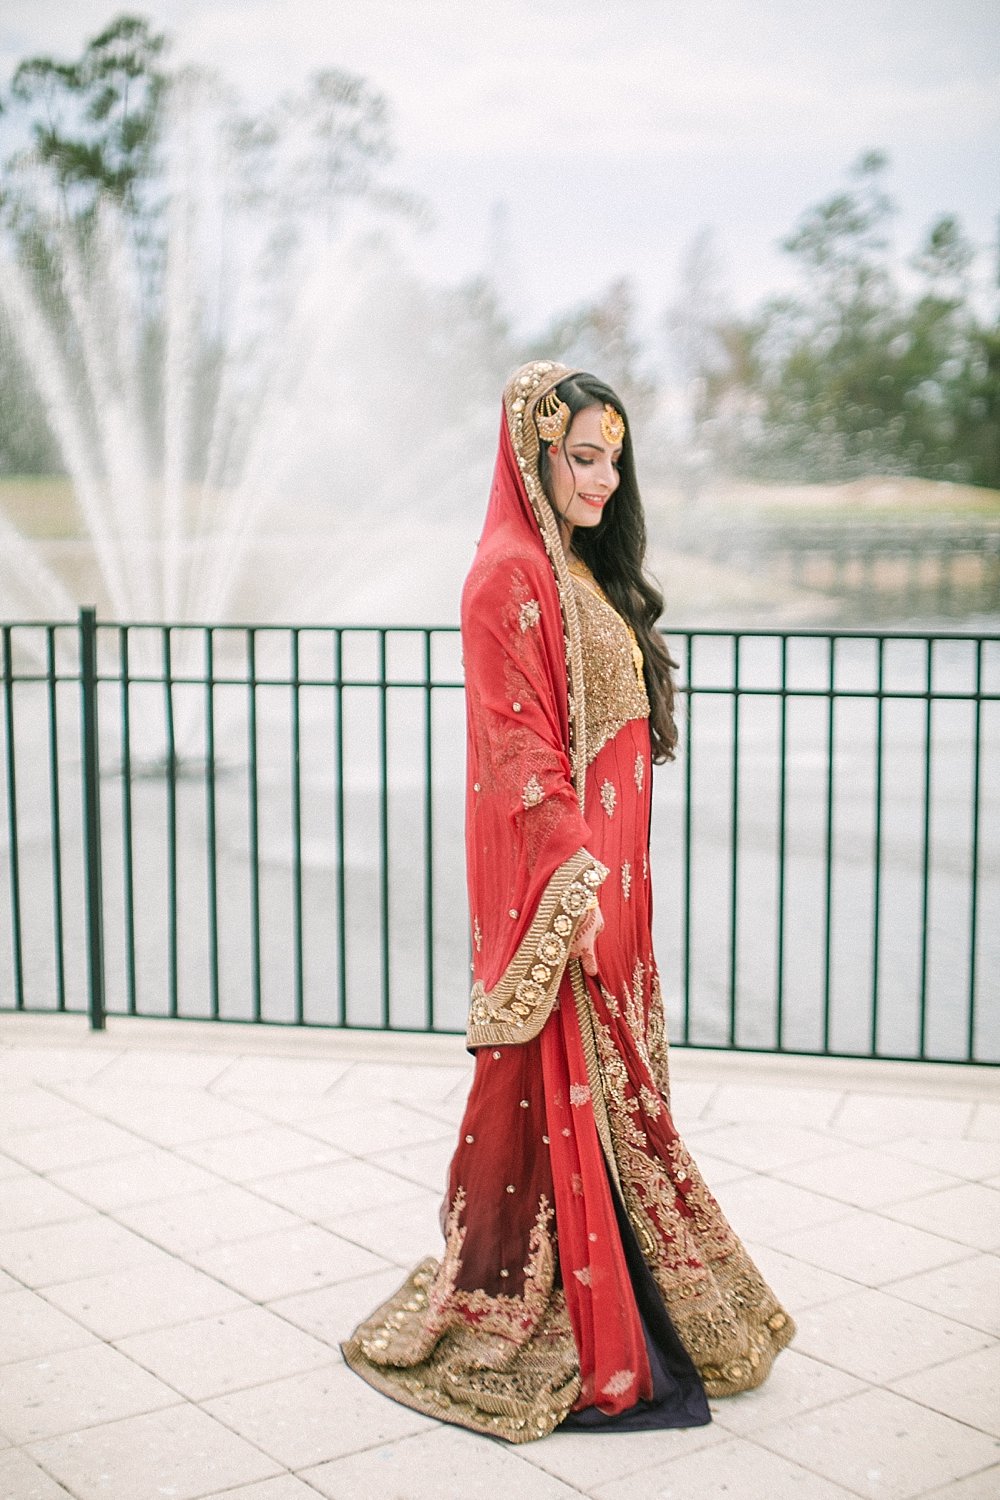  Indian Wedding Hilton Bonnet Creek Waldorf Astoria Orlando FL - Mamiya 645 afd - Film Photography | Ashley Holstein Photography #indianbride #portra400